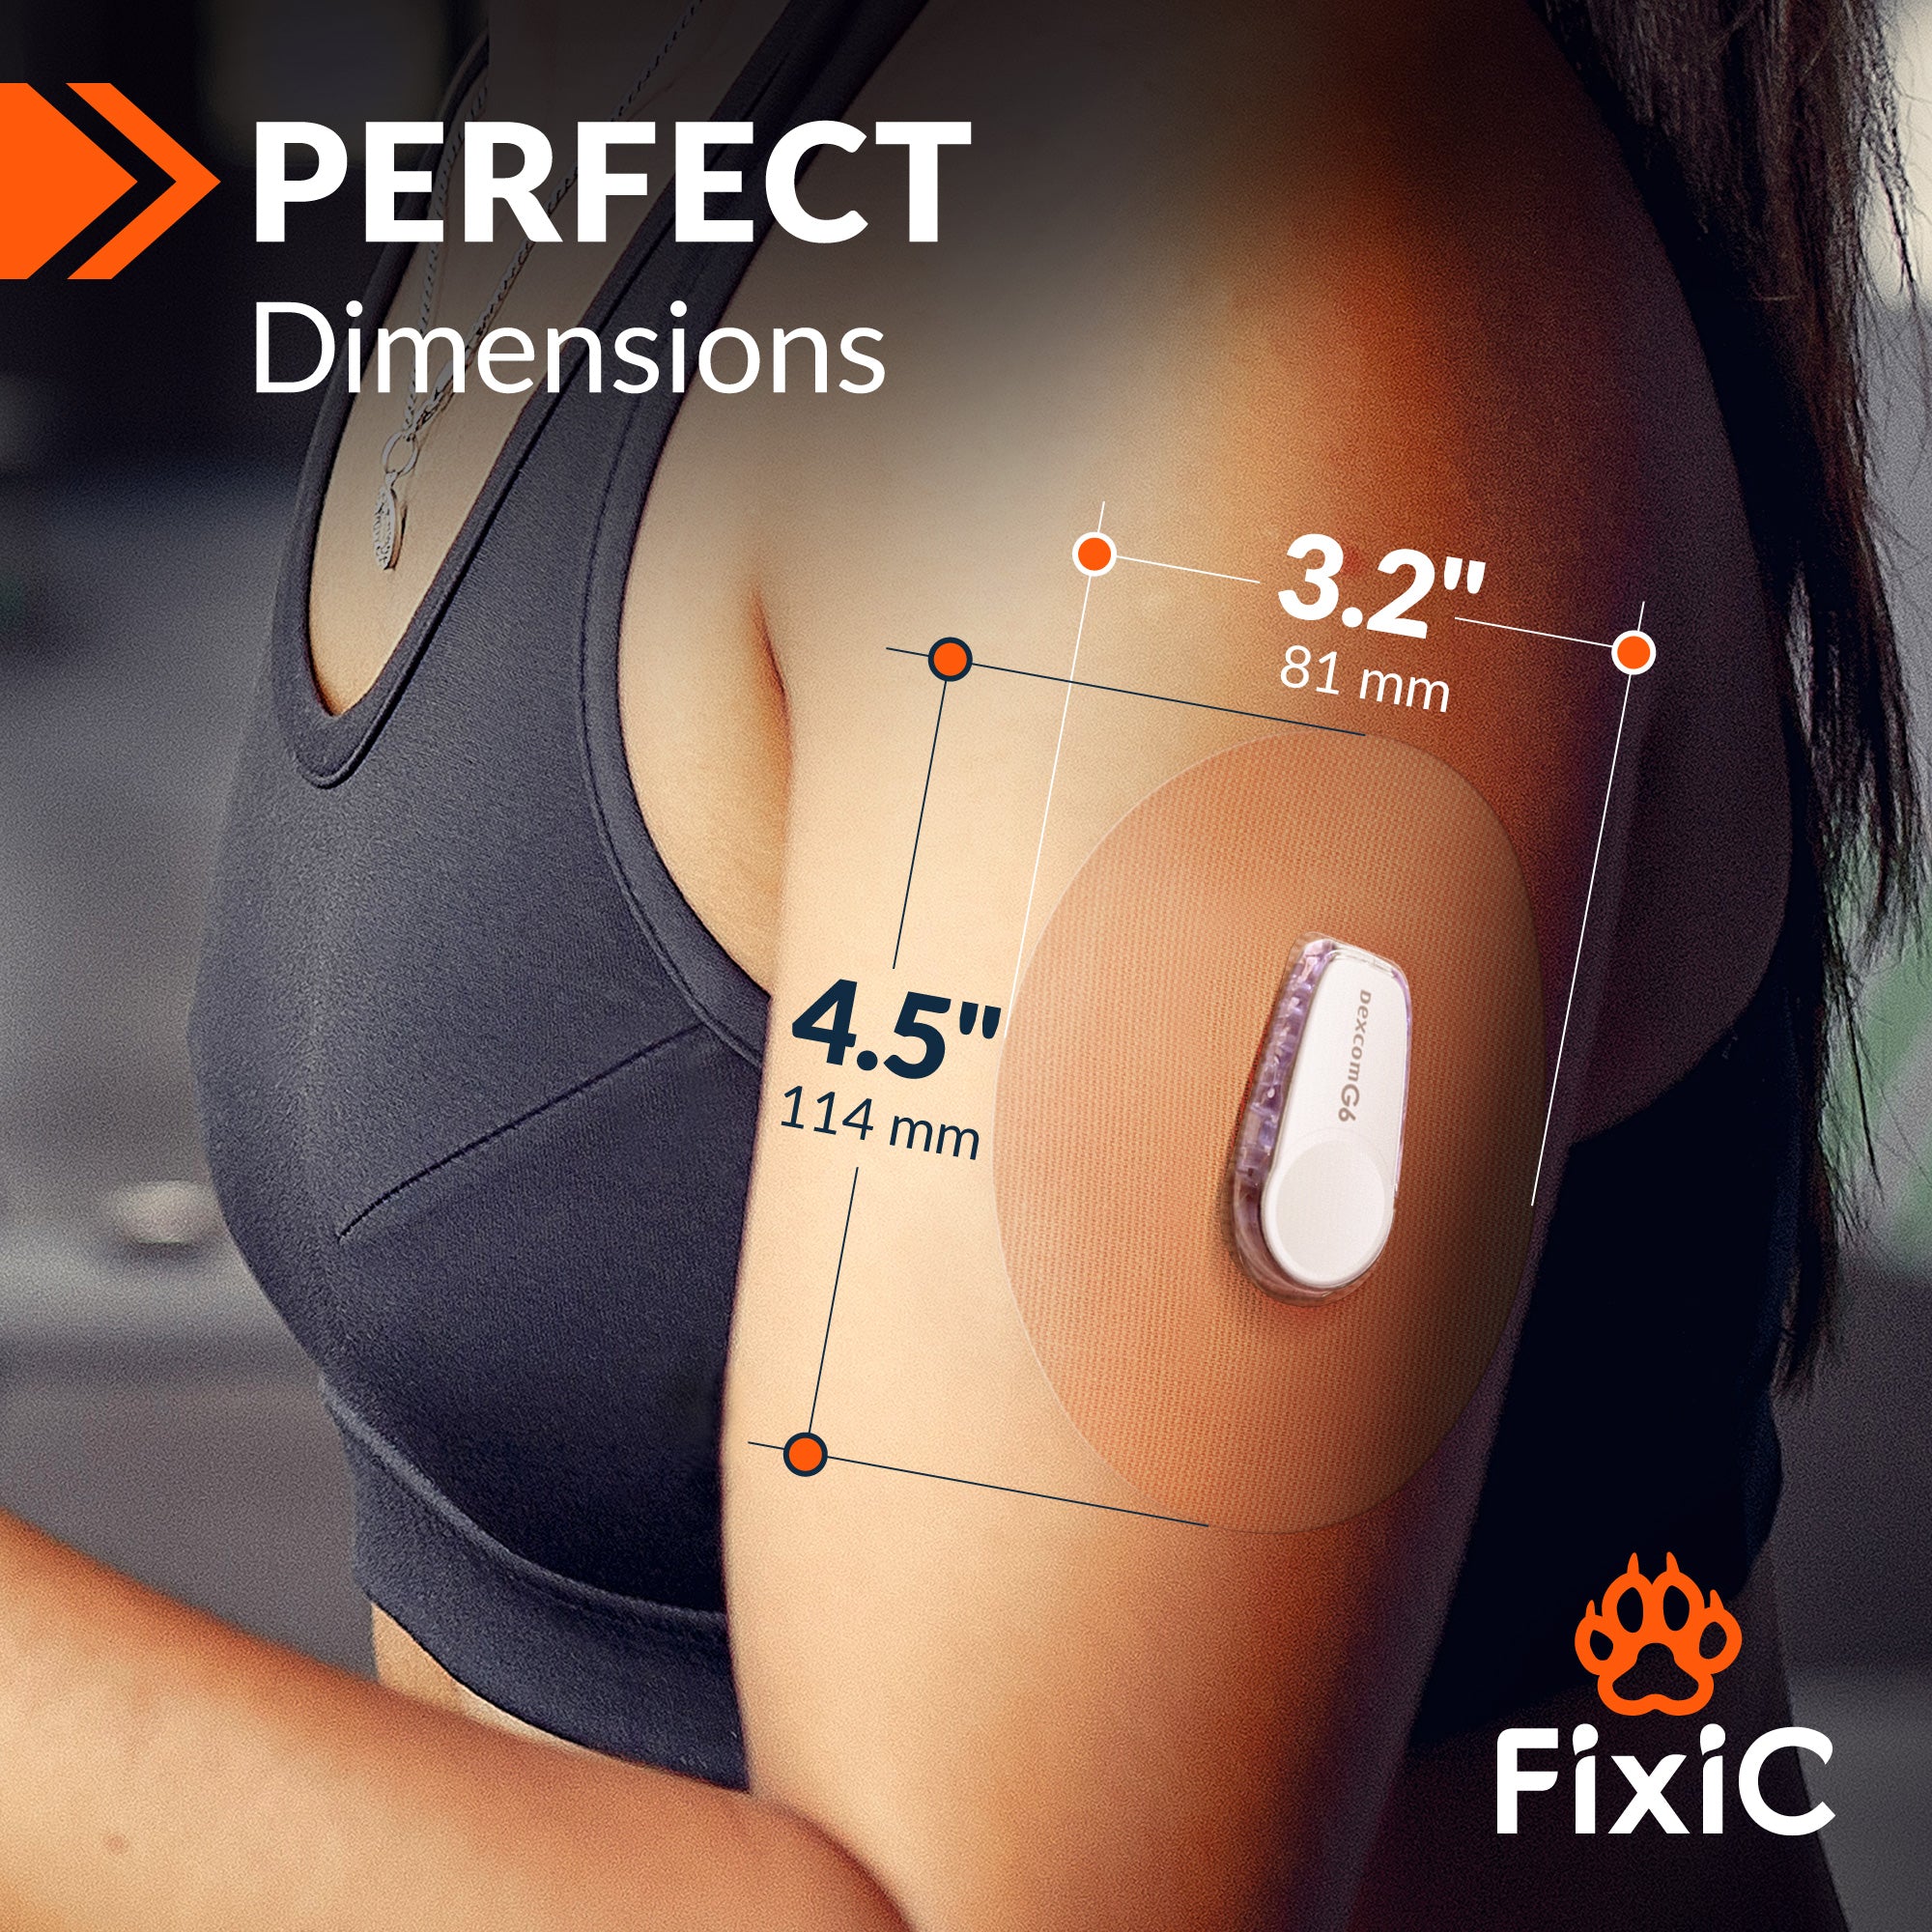  OhmRx Dexcom G6 Adhesive Patches Waterproof - Pre Cut Pack of  25 Clear Color Dexcom G6 Sensors Patches Lasts 10-14 Days Dexcom G6 Sensor  Covers : Health & Household